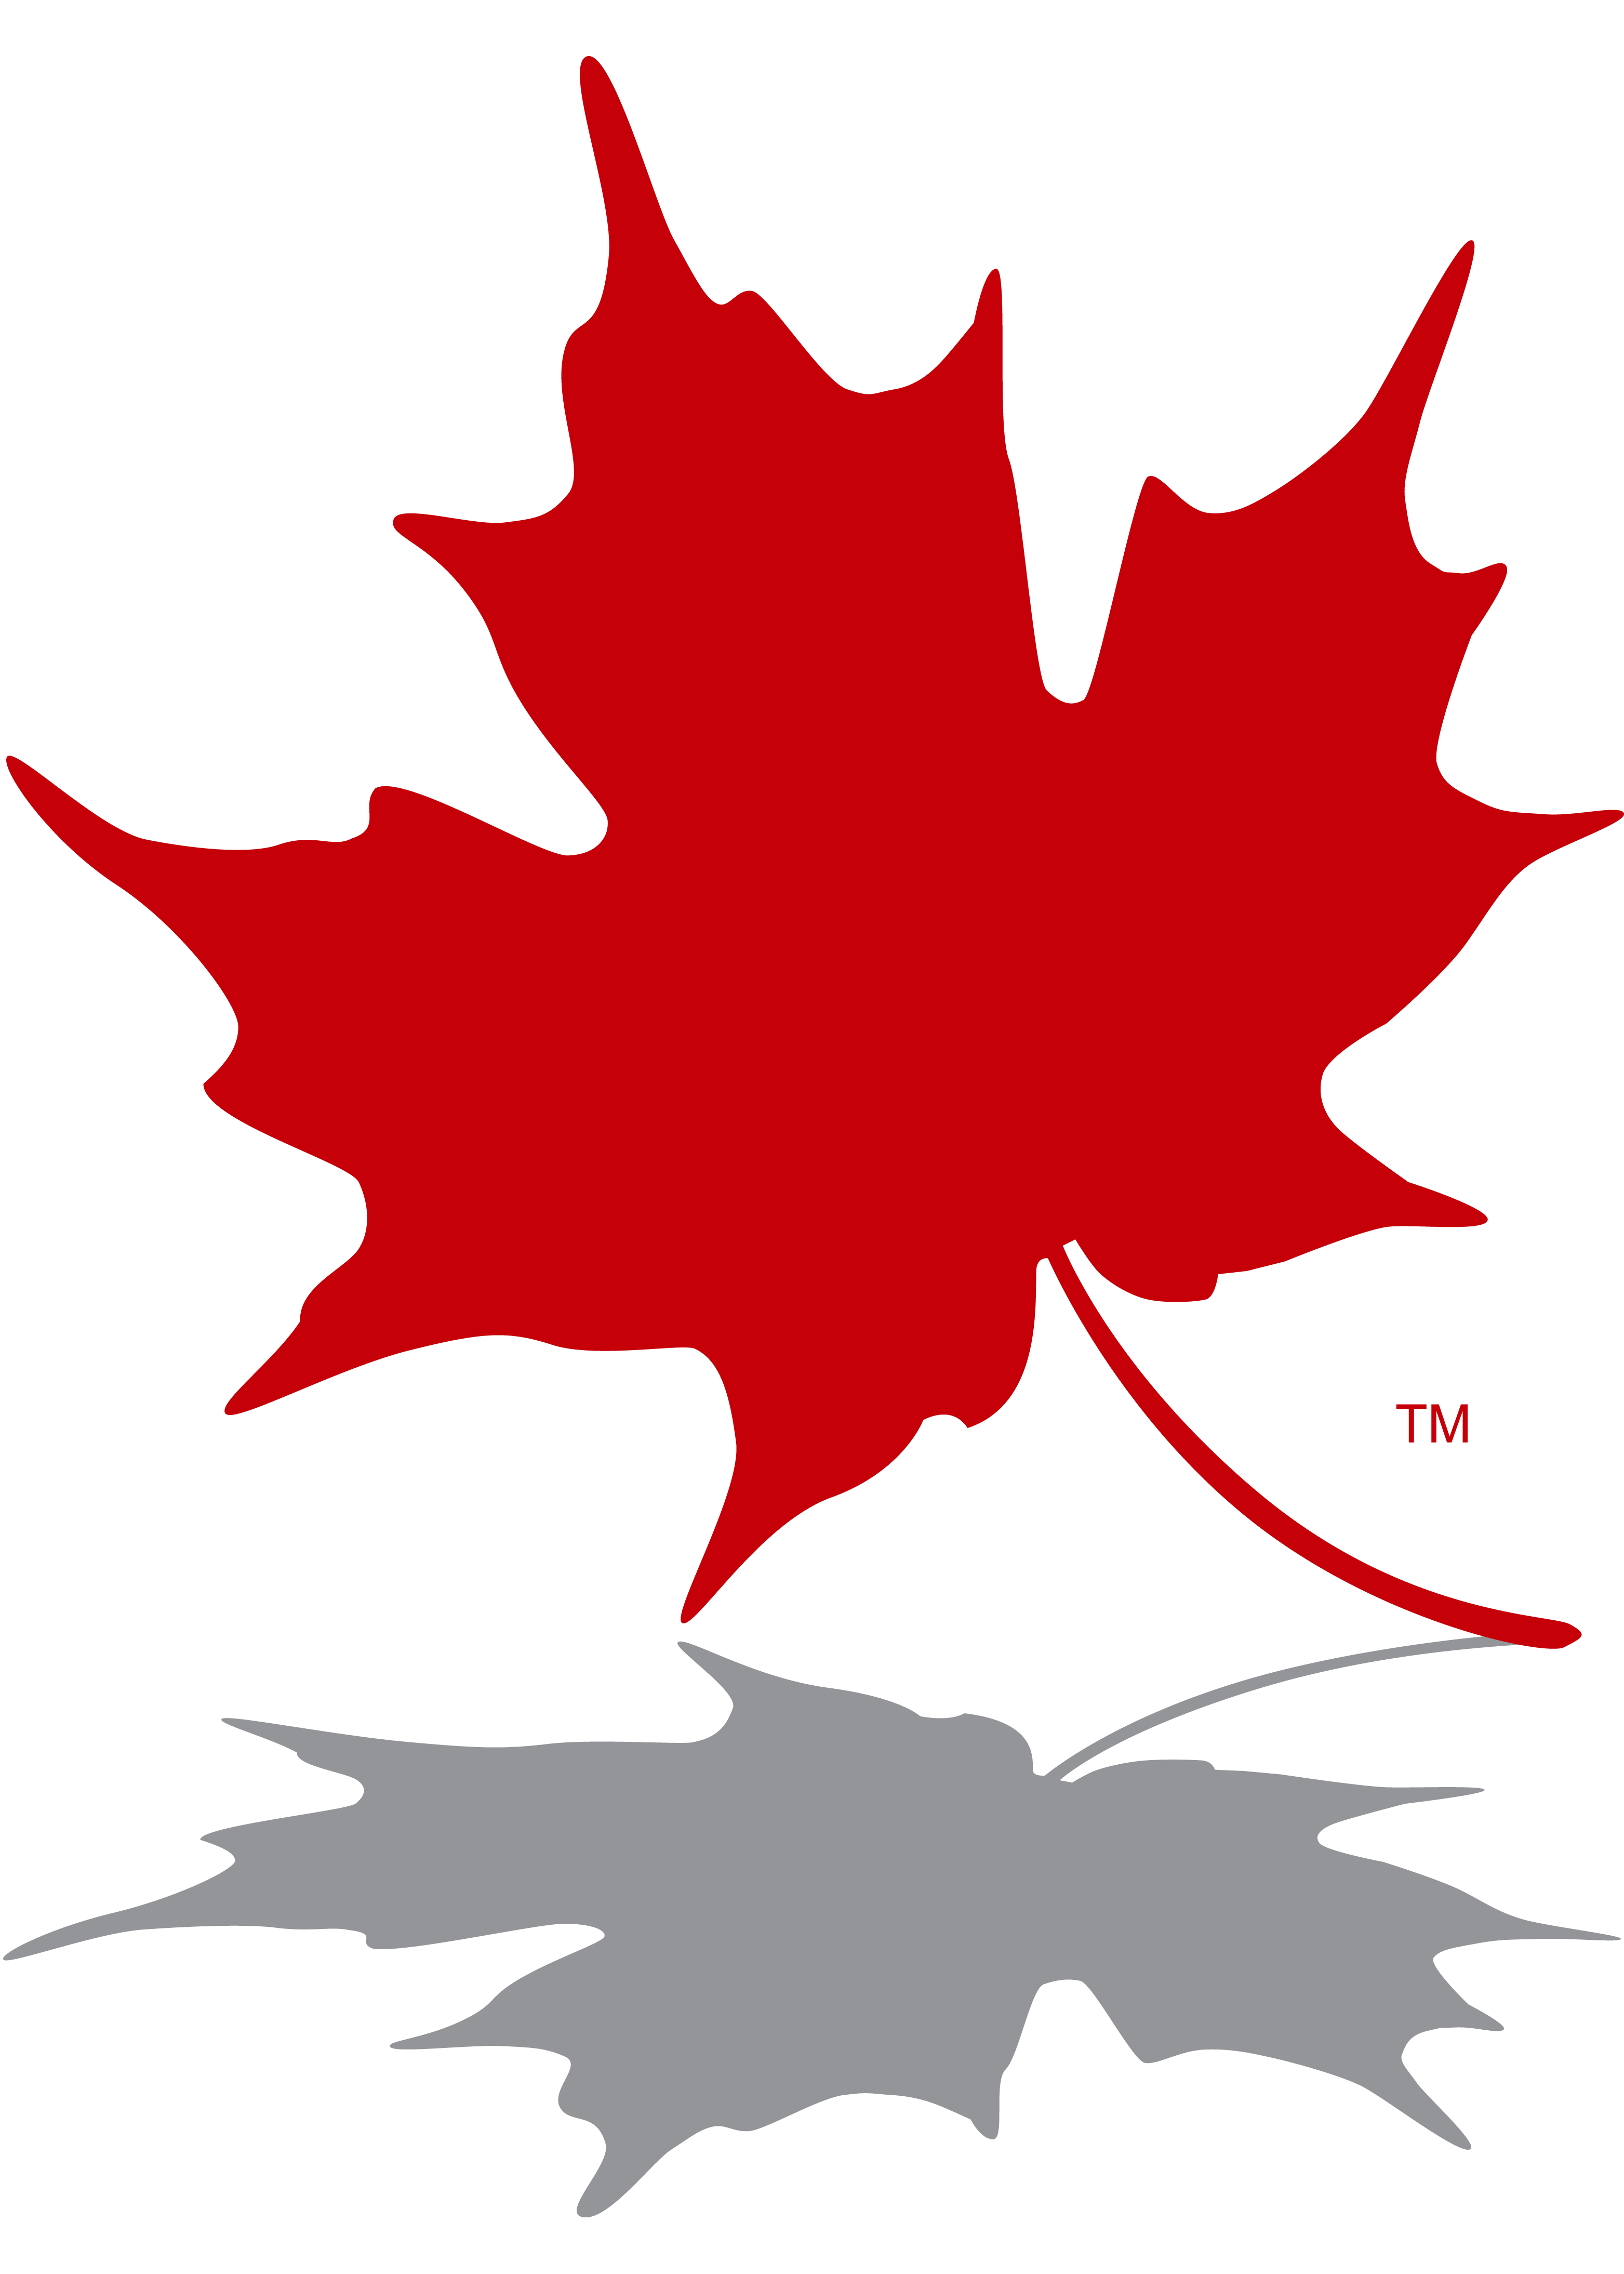 Au! 10+ Sannheter du Ikke Visste om Canada Maple Leaf Logo: Ibraheem